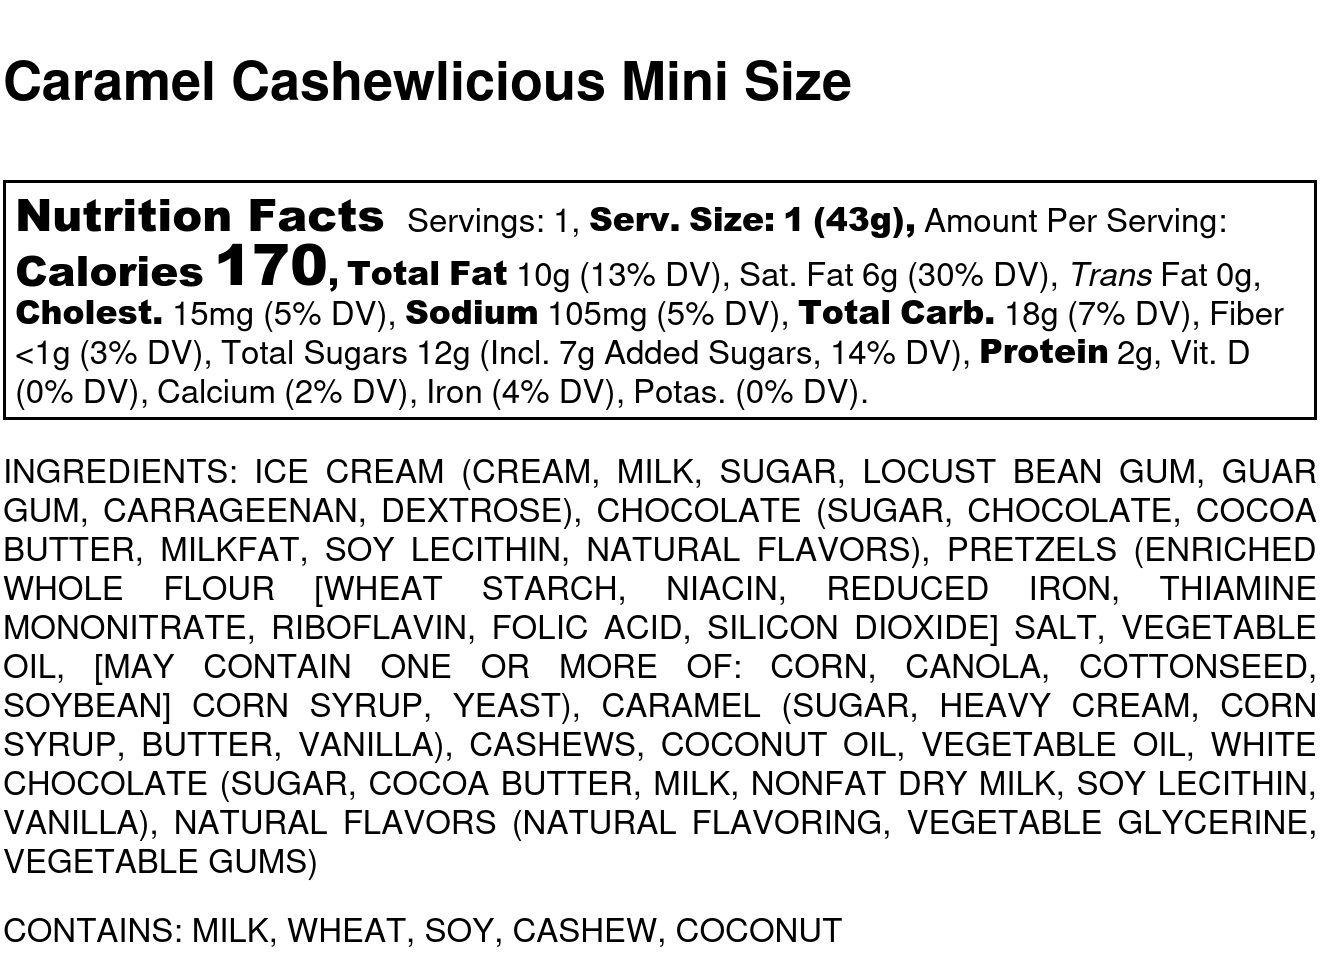 Caramel Cashewlicious Mini Size Nutrition Label